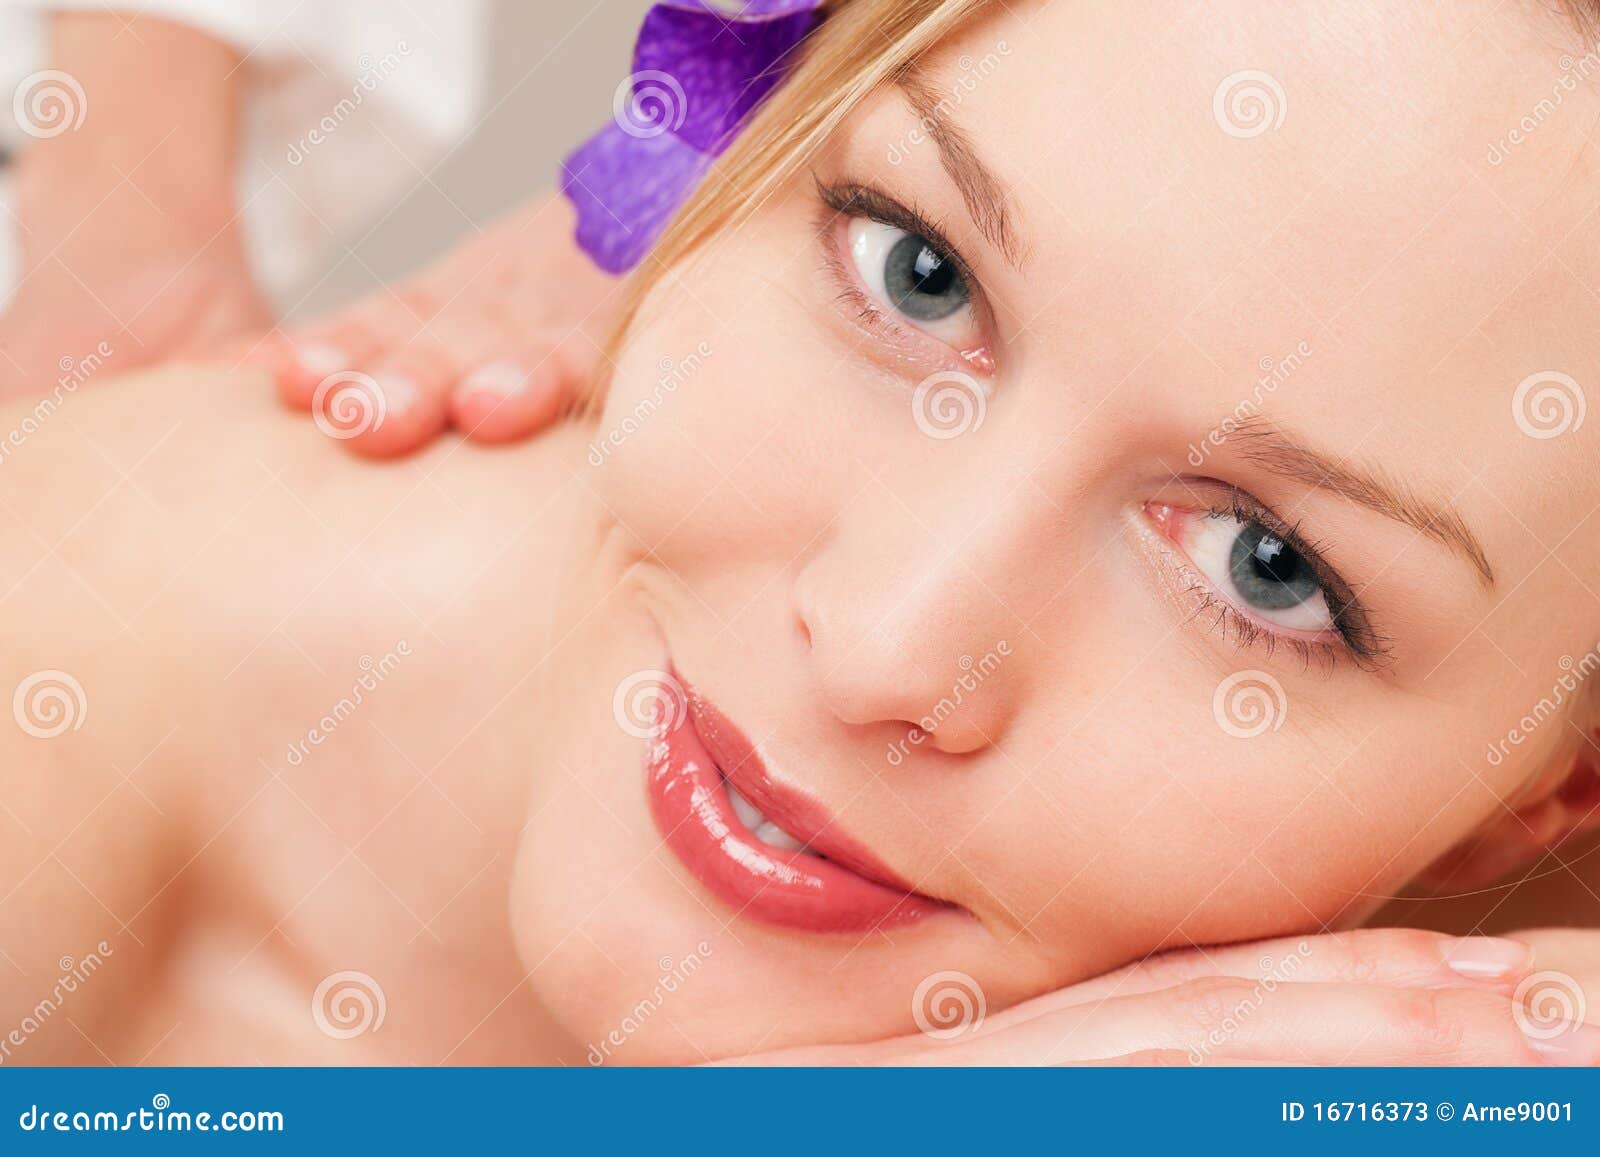 Wellness Girl Having Massage In Spa Stock Image Image Of